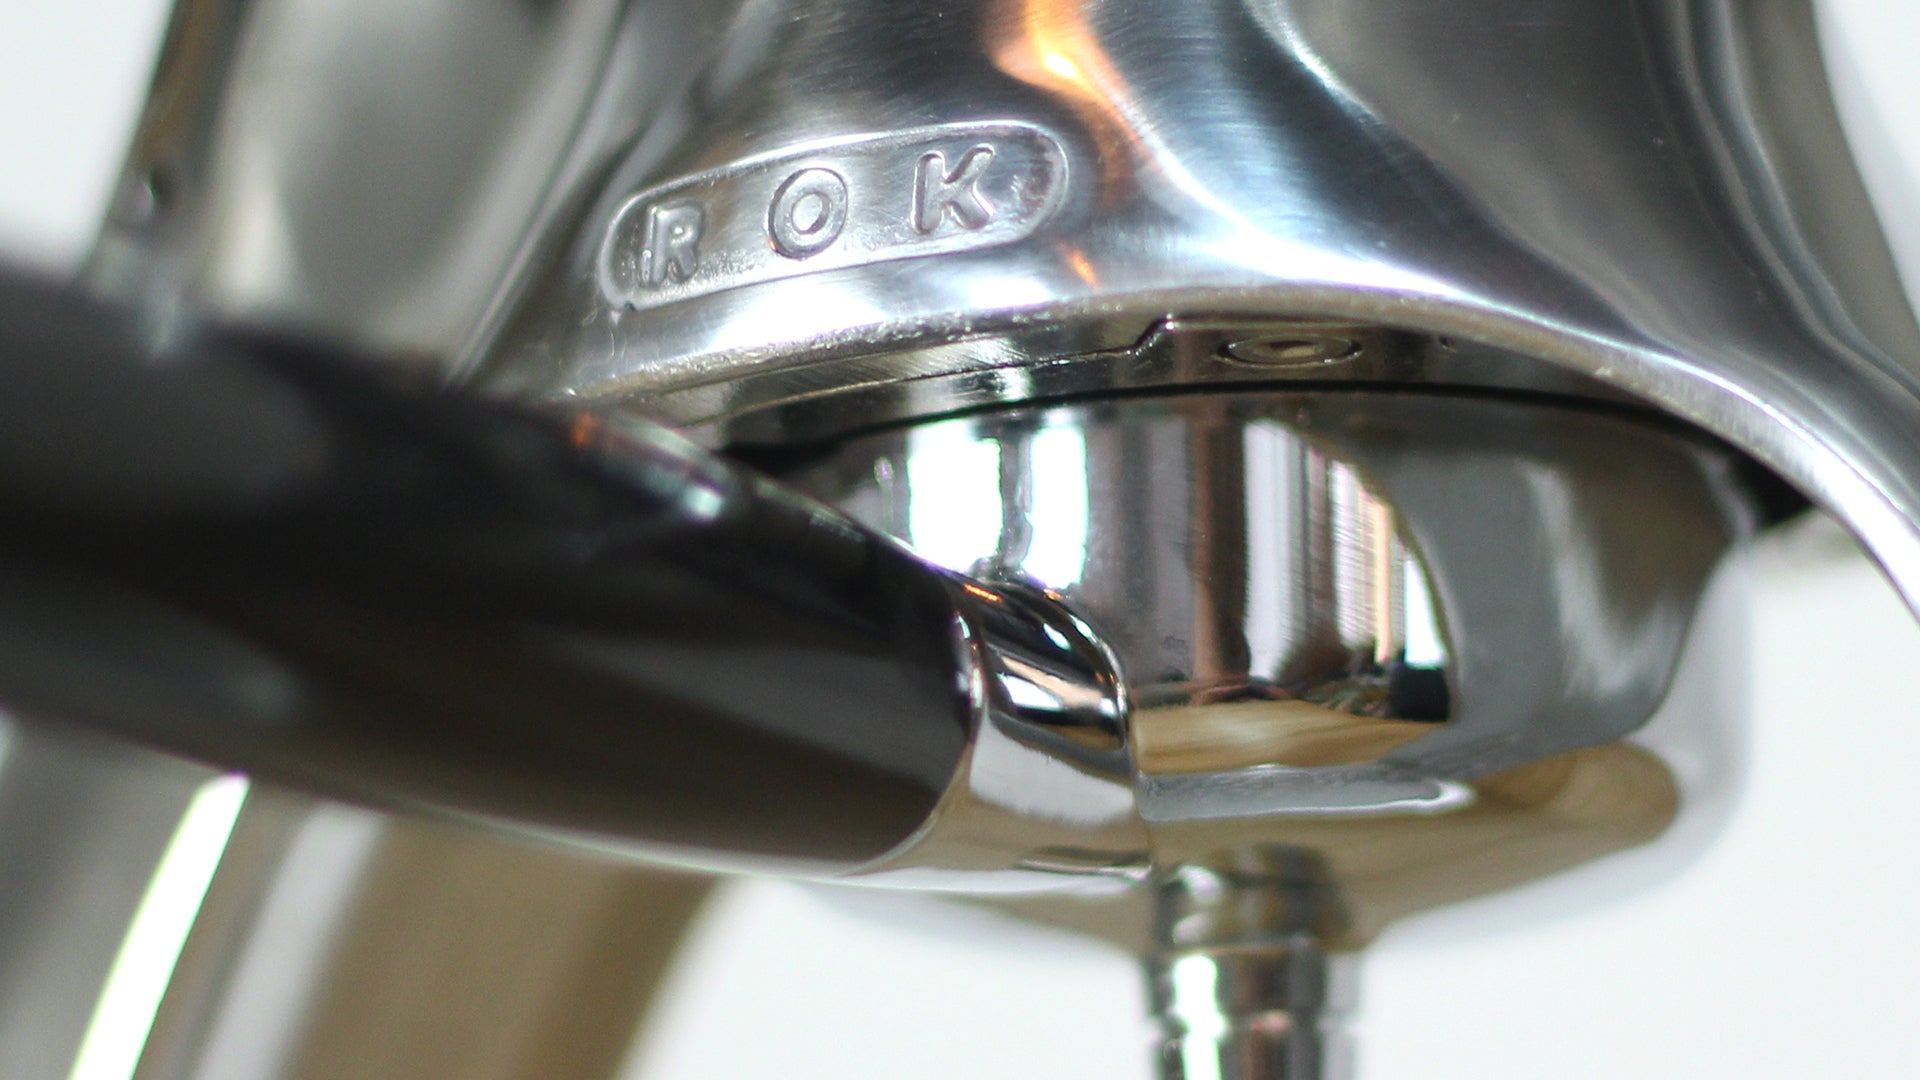 The ROK Espresso Maker in (less than) 60 seconds